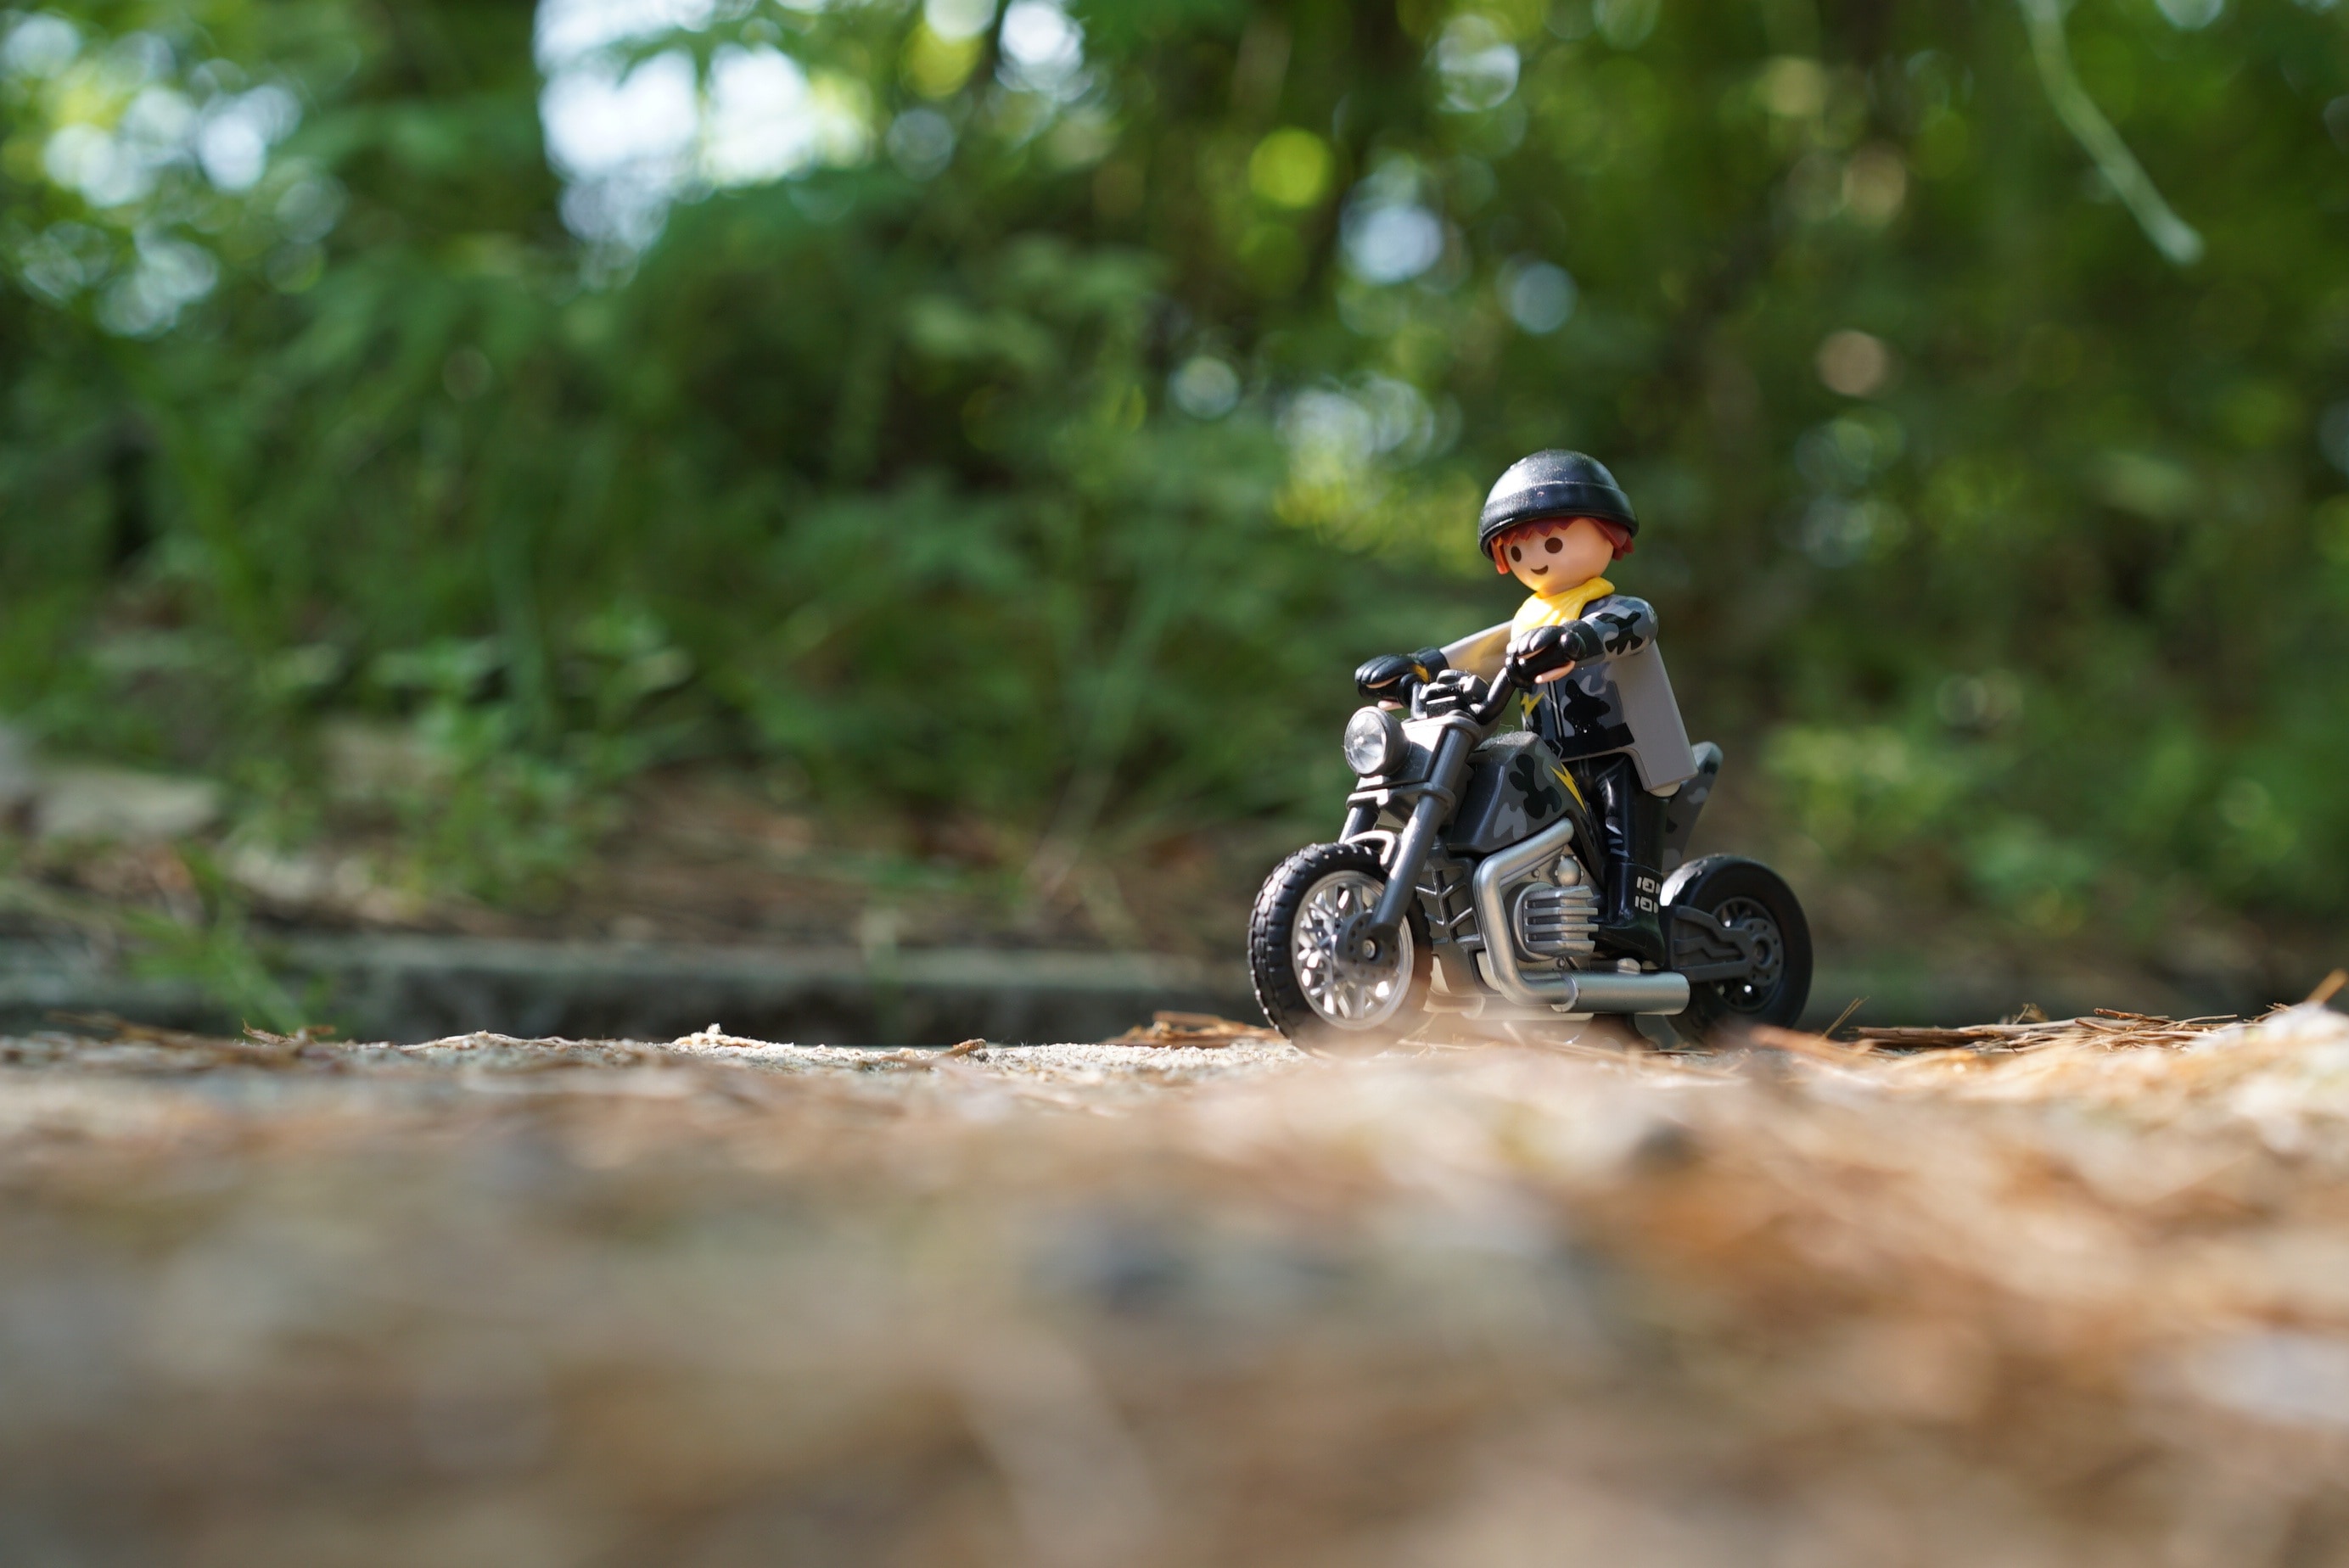 man riding motorcycle lego minifig